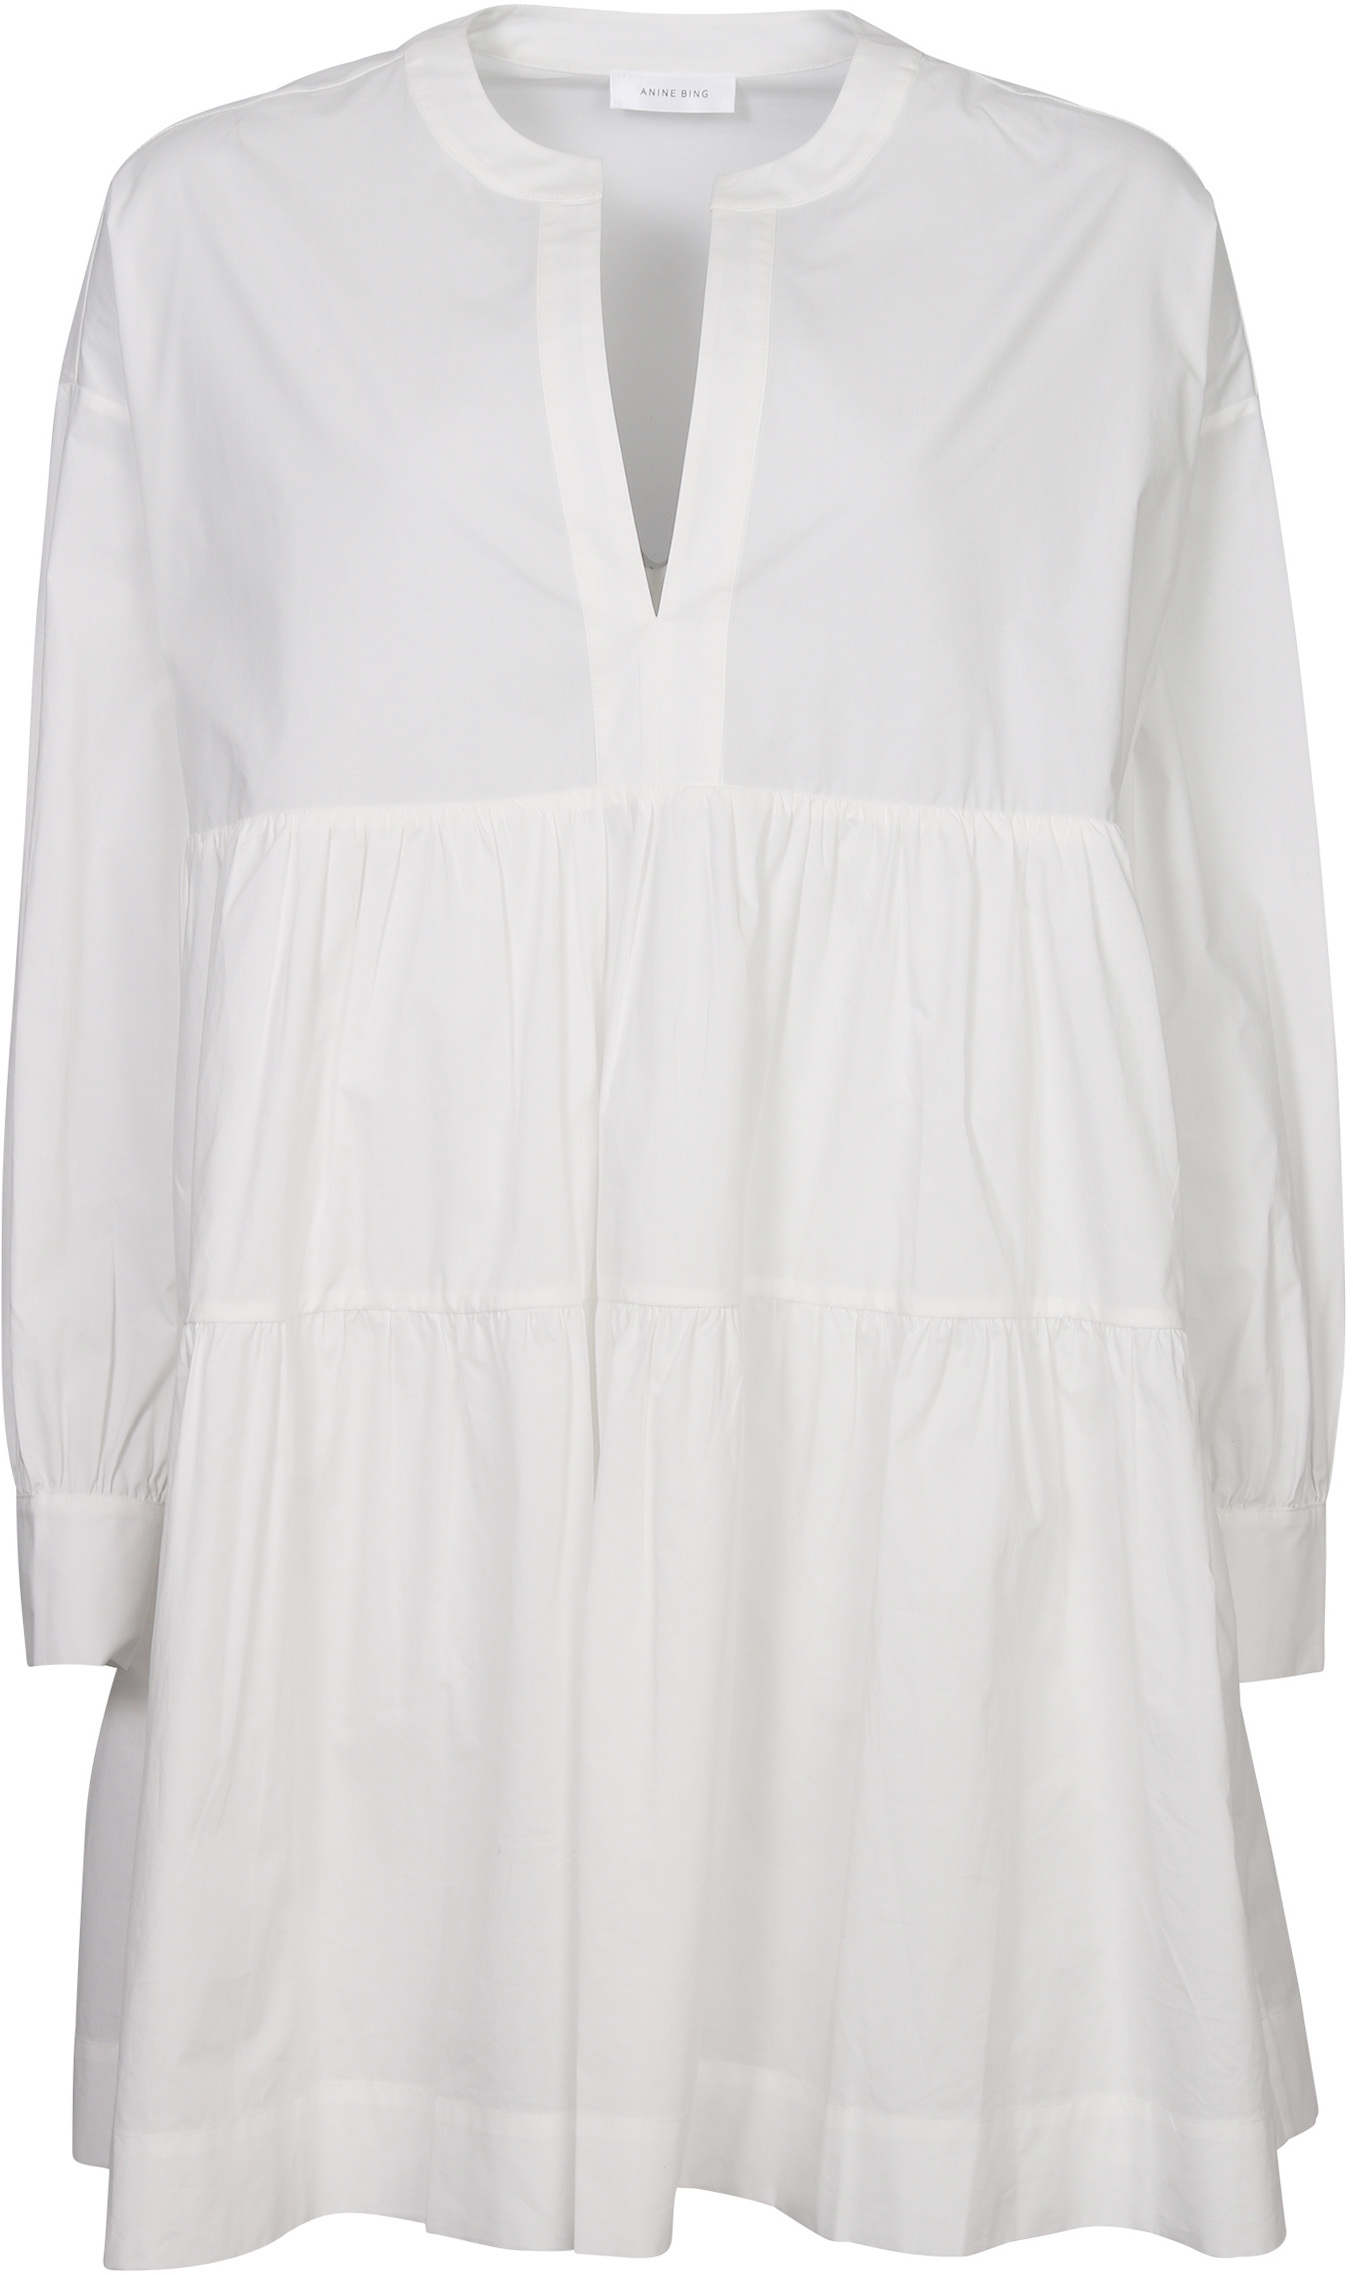 Anine Bing Dress Addison White S